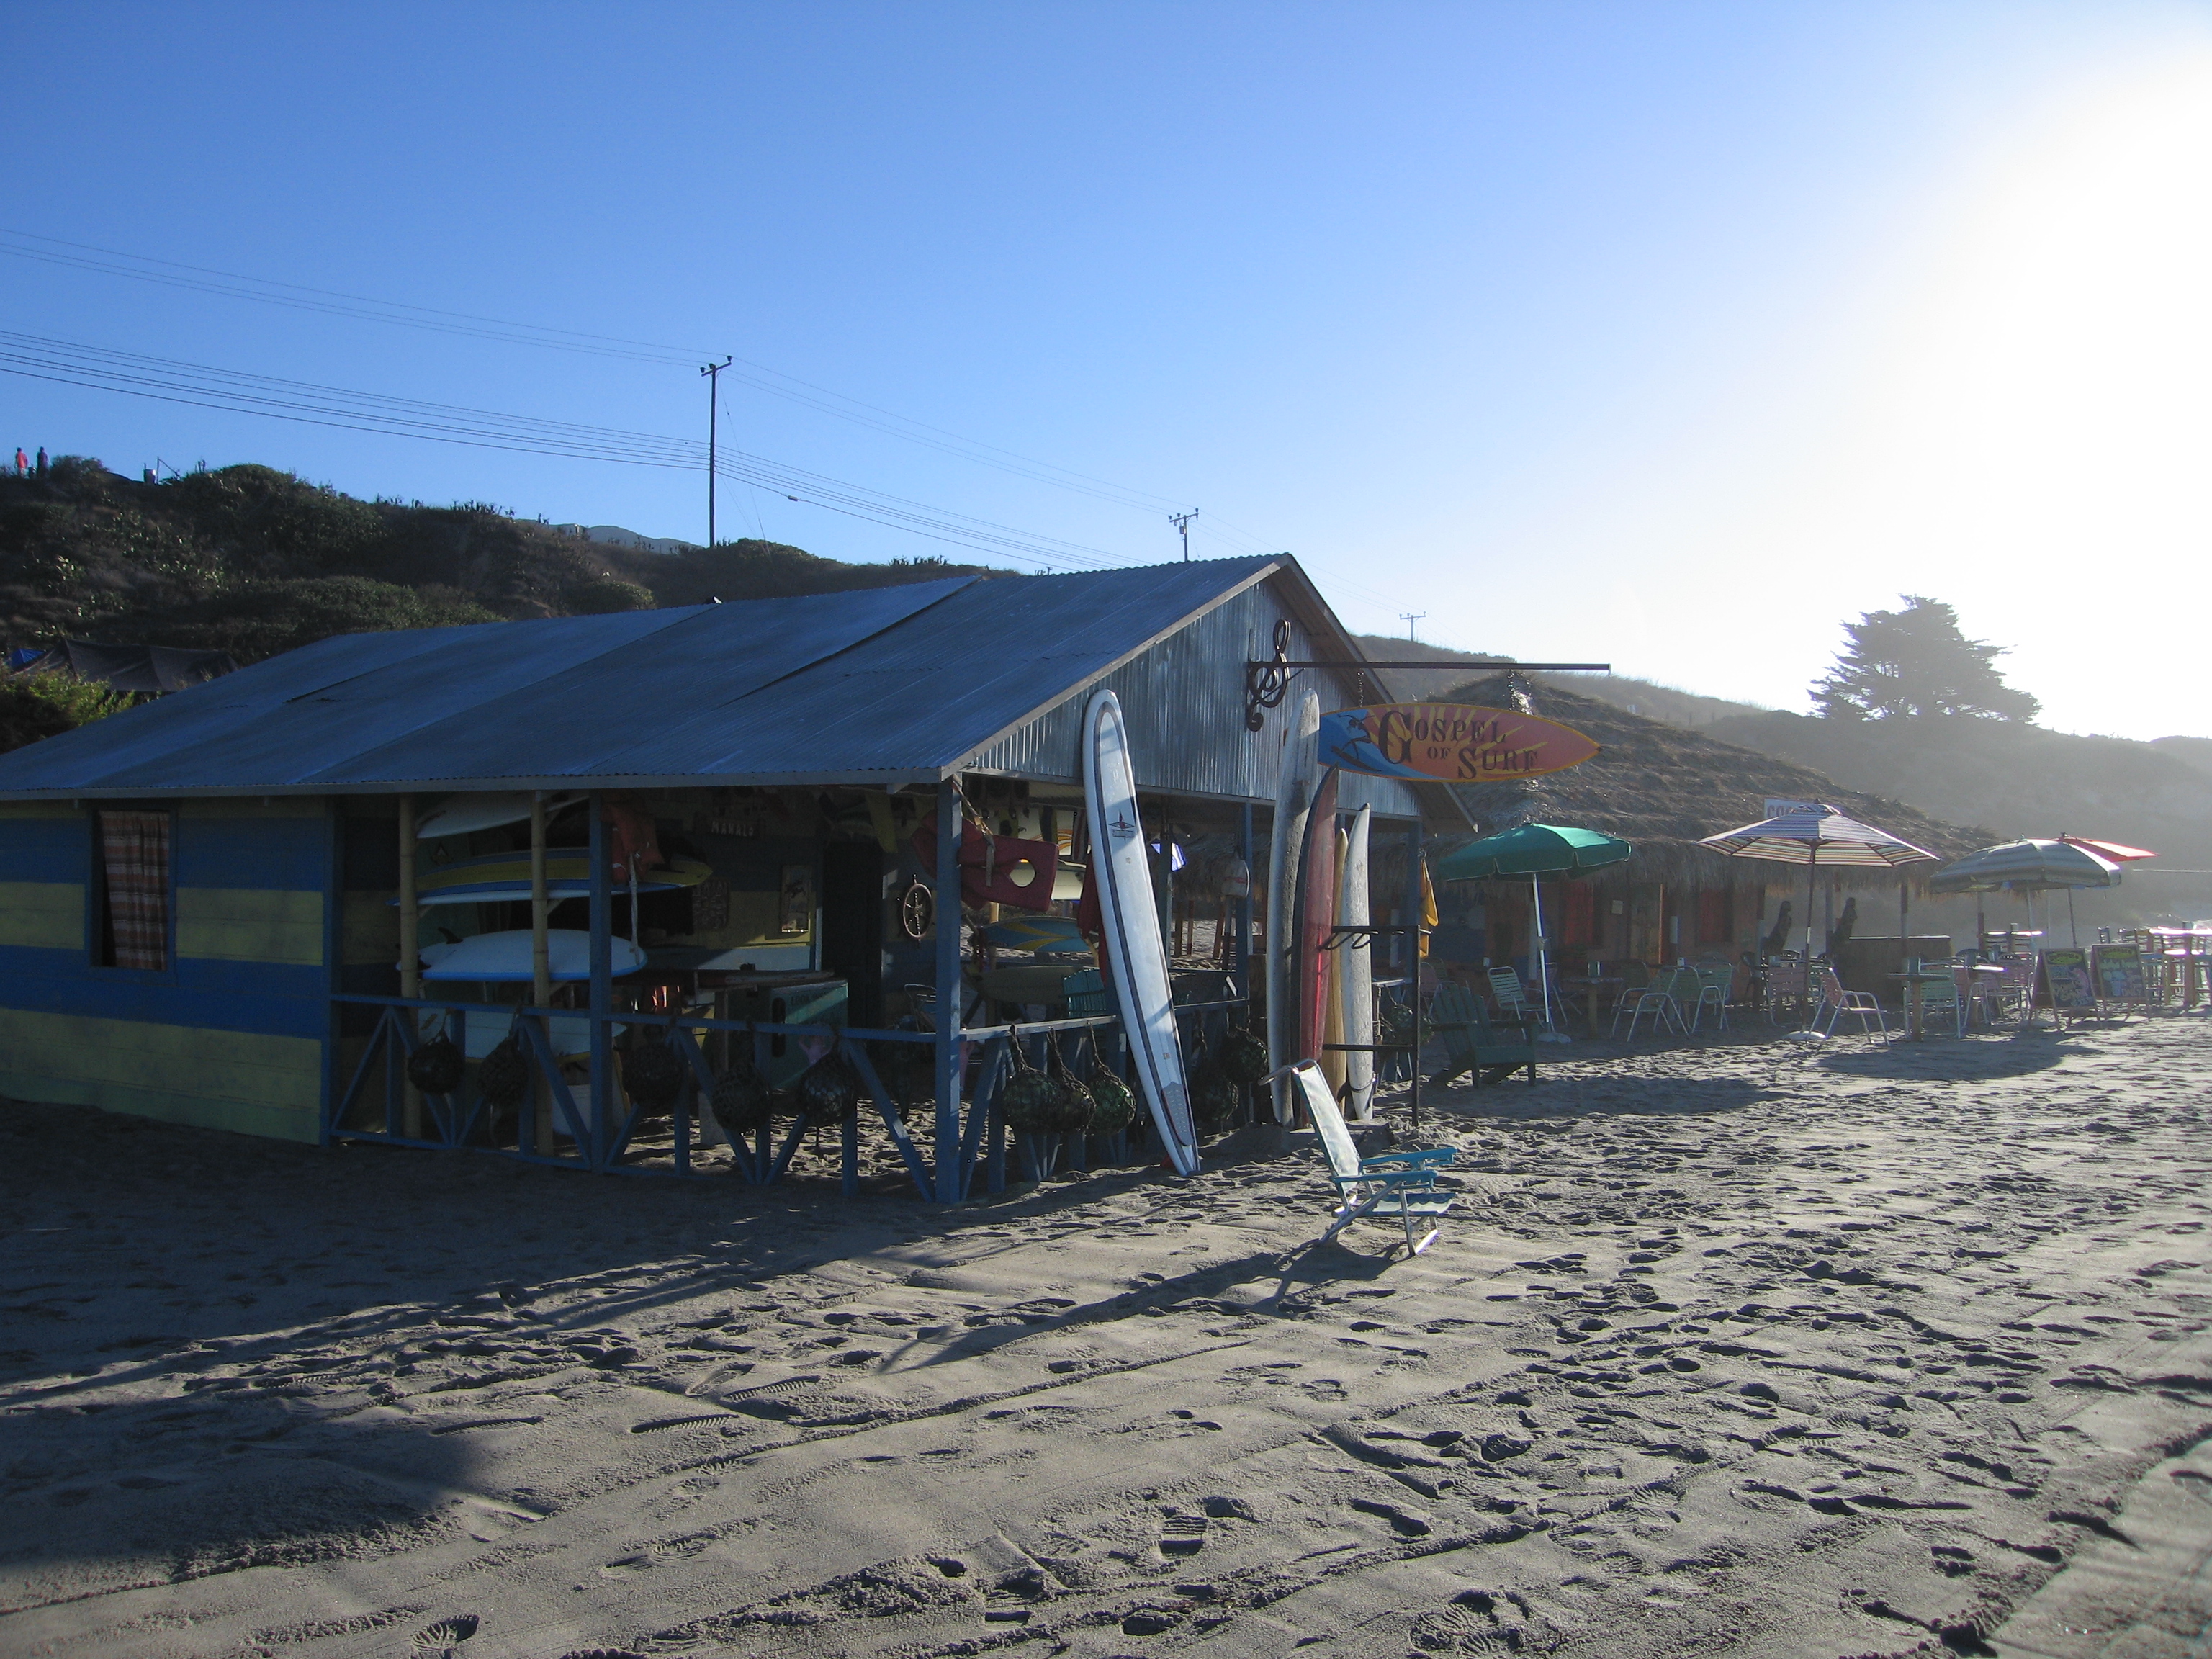 Eli Stone - The Gospel of Surf surf shop and restaurant constructed on the beach near Leo Carrillo